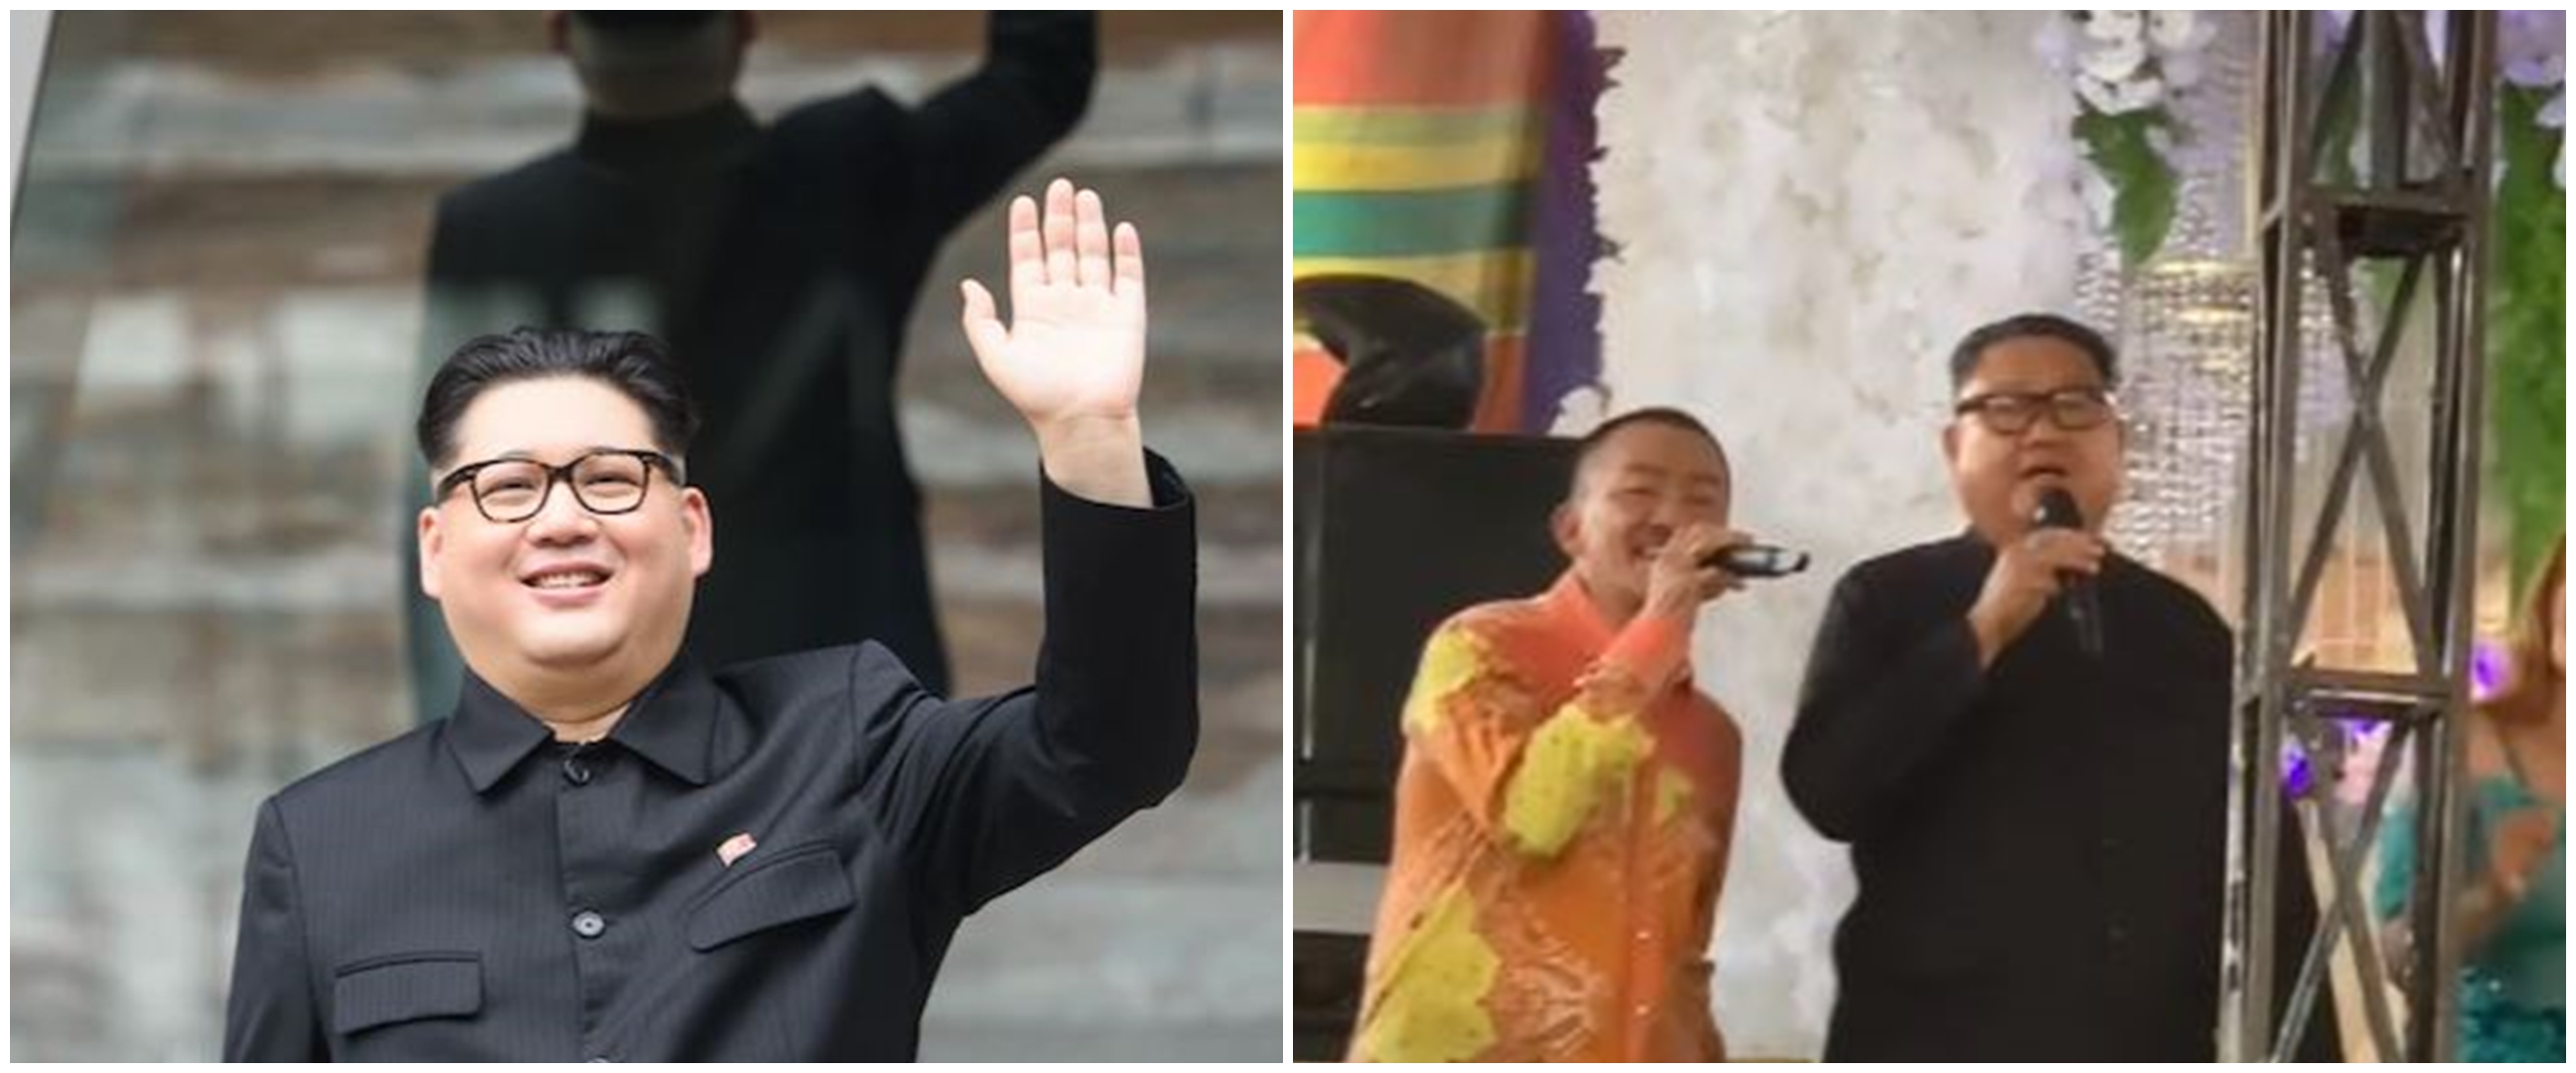 Aksi pria mirip Kim Jong-un sumbang lagu saat kondangan, bikin salfok